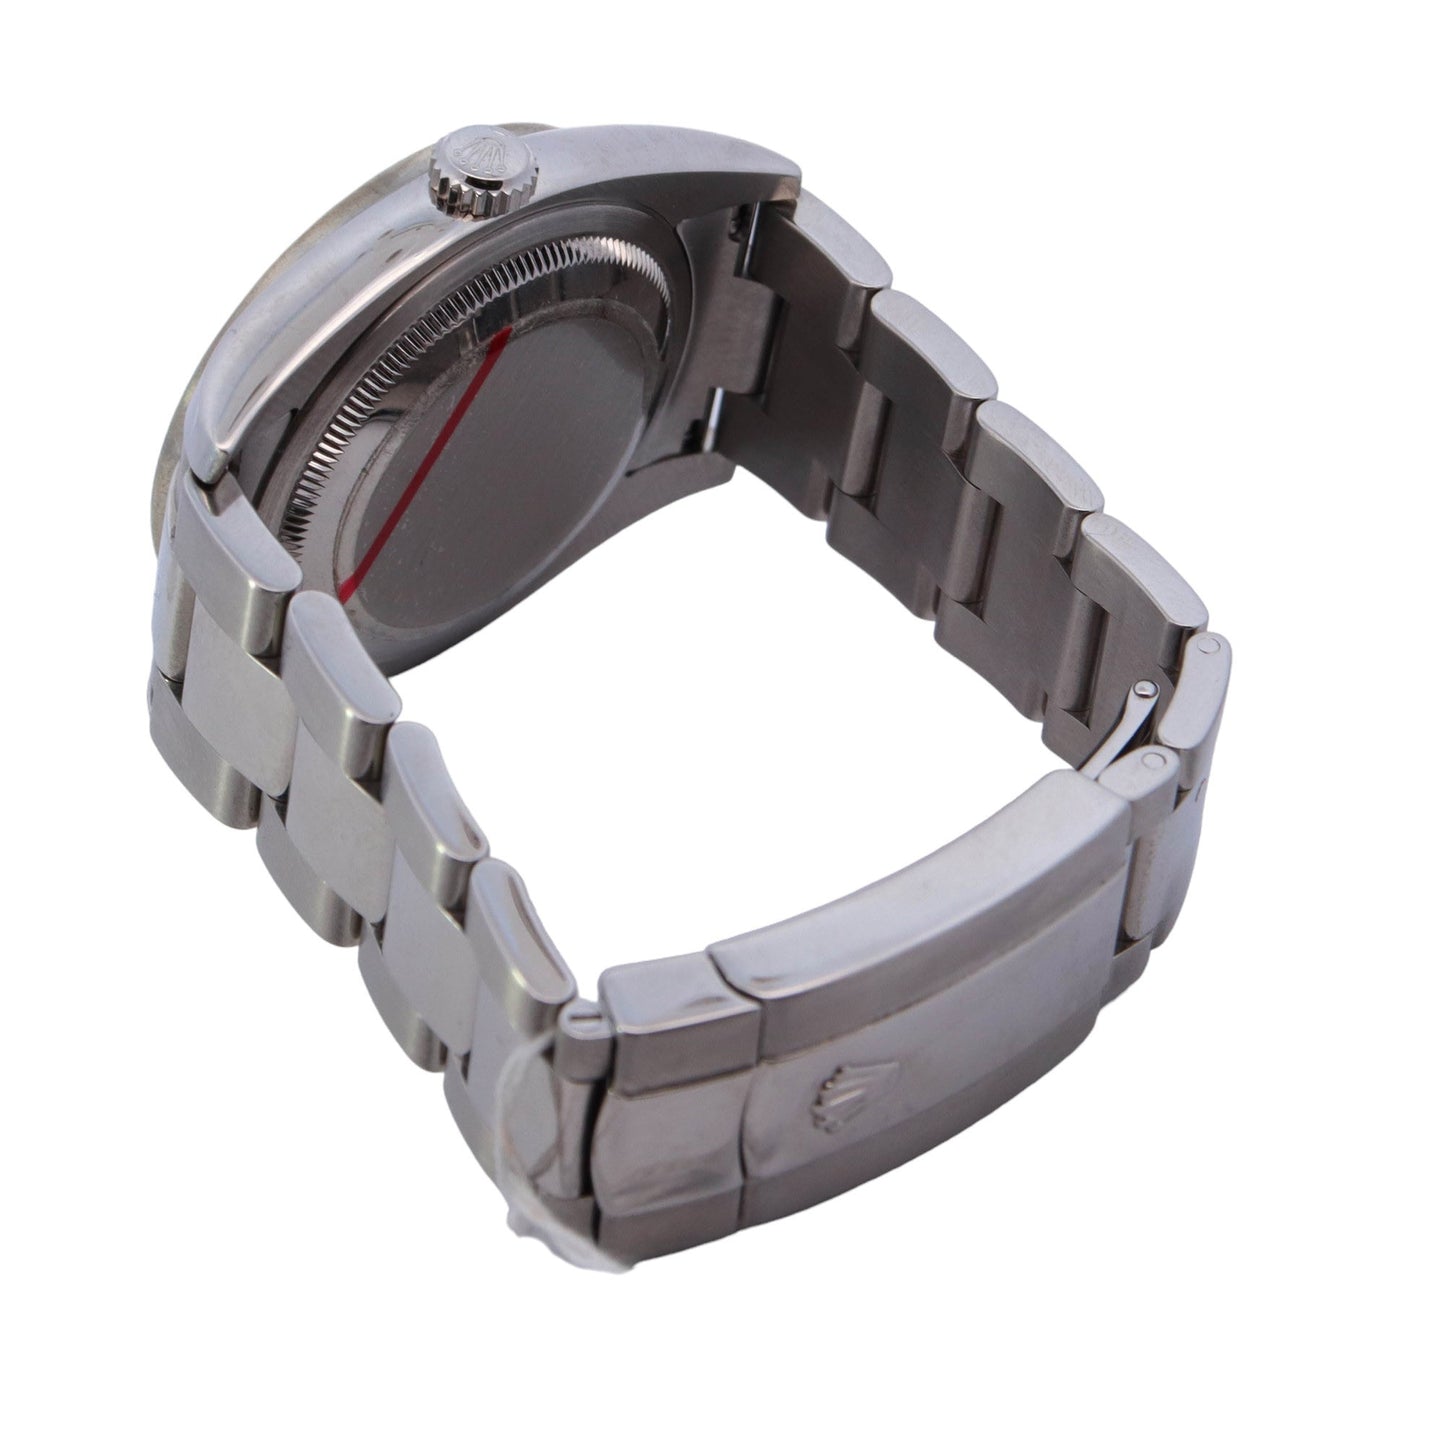 Rolex Datejust Stainless Steel 36mm White Stick Dial Watch Reference #: 116264 - Happy Jewelers Fine Jewelry Lifetime Warranty